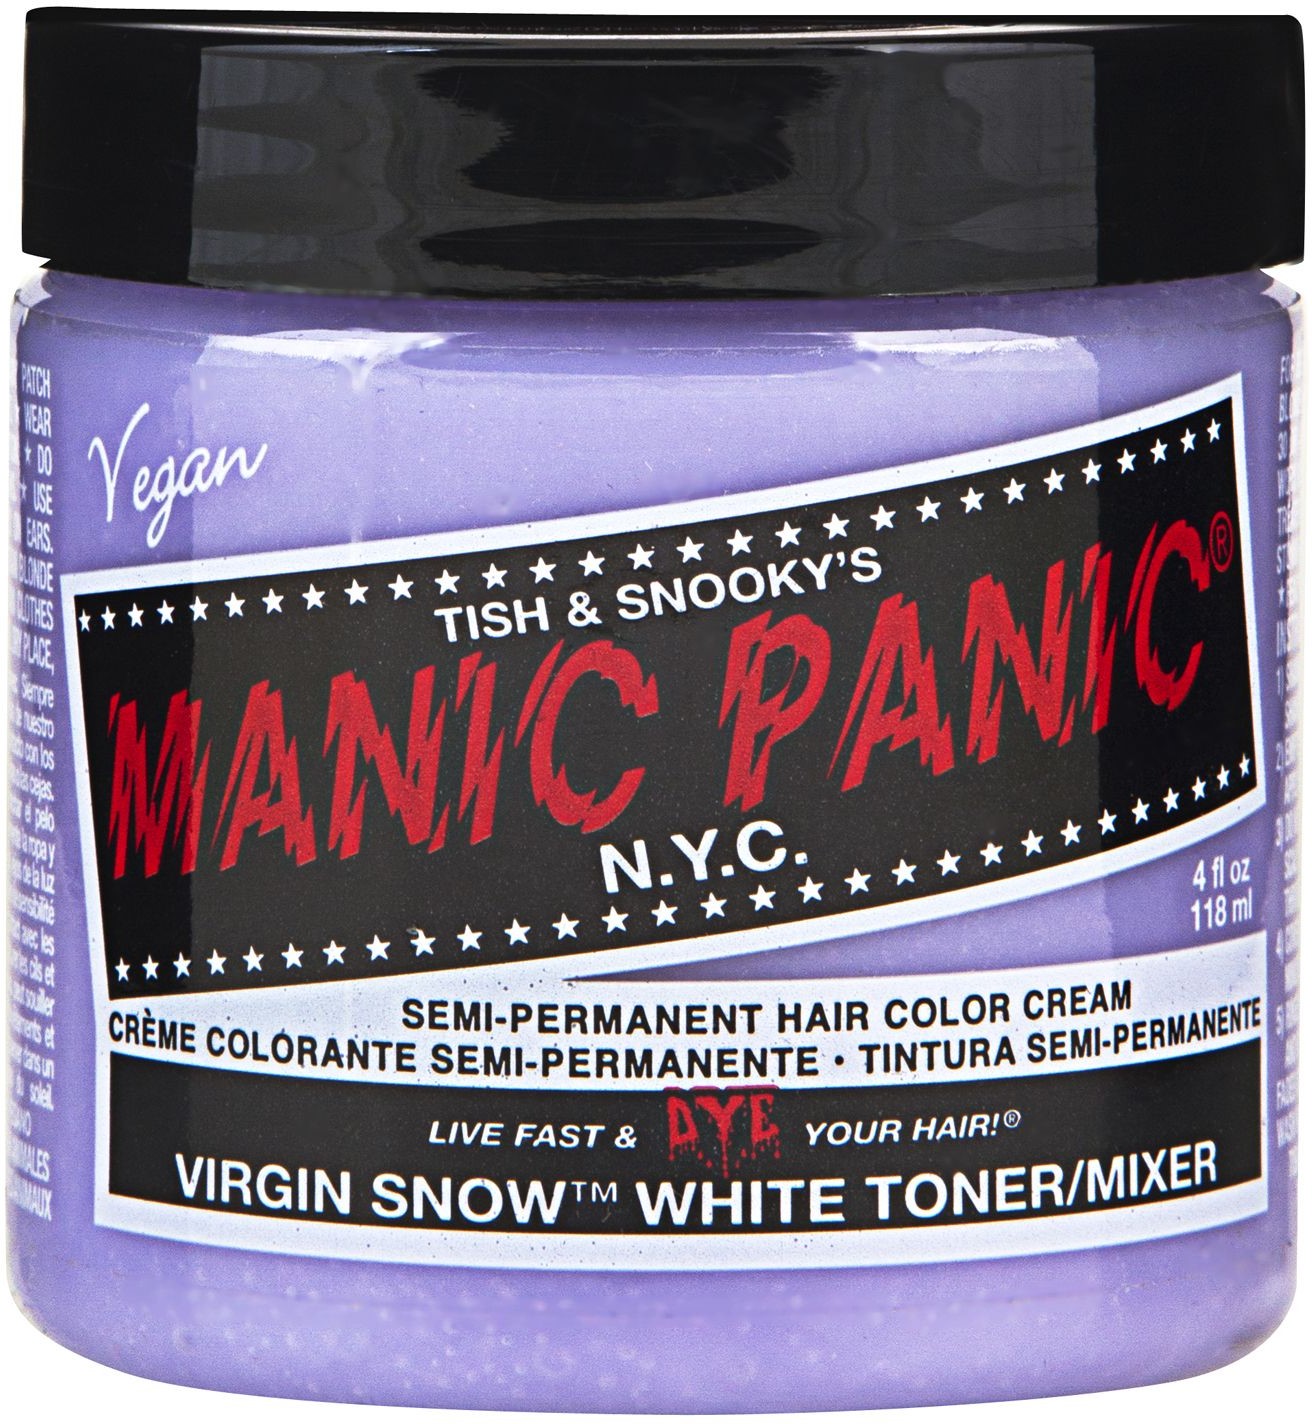 Manic Panic Semi-Permanent Hair Color Cream Virgin Snow 4 oz - image 1 of 2